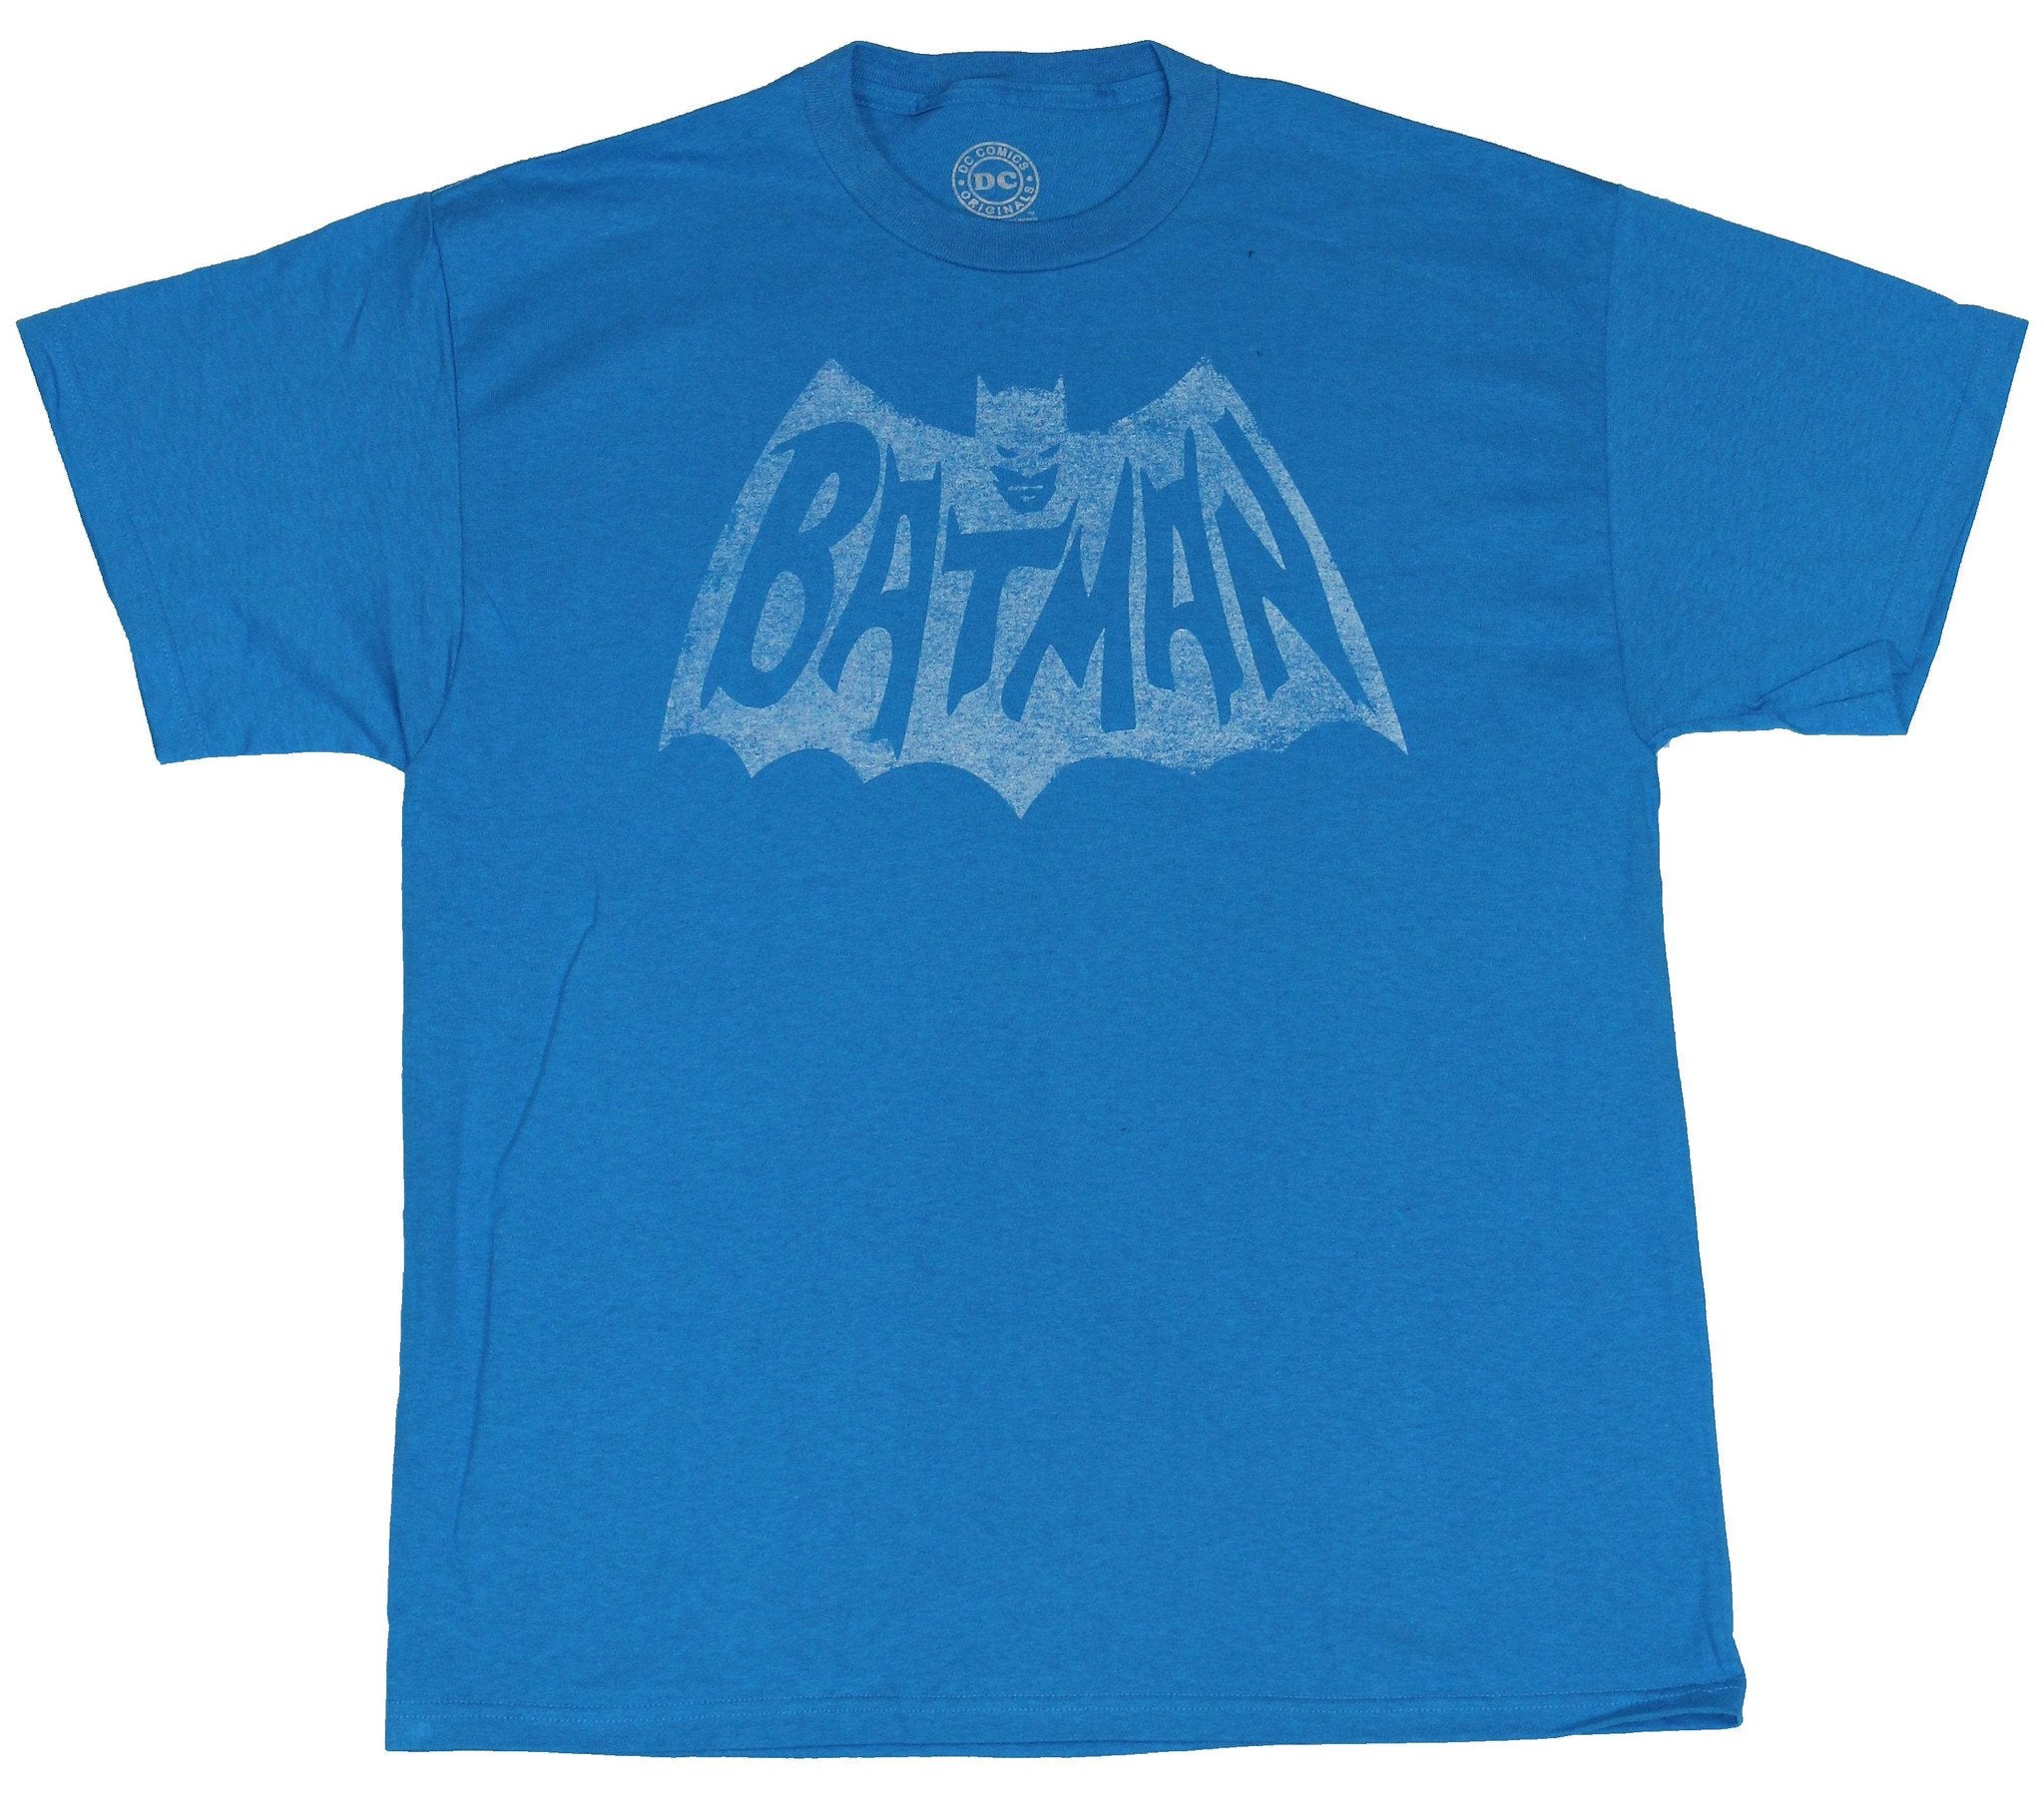 Batman (DC Comics) Mens T-Shirt - Distressed Single Color Print 60's Style Logo